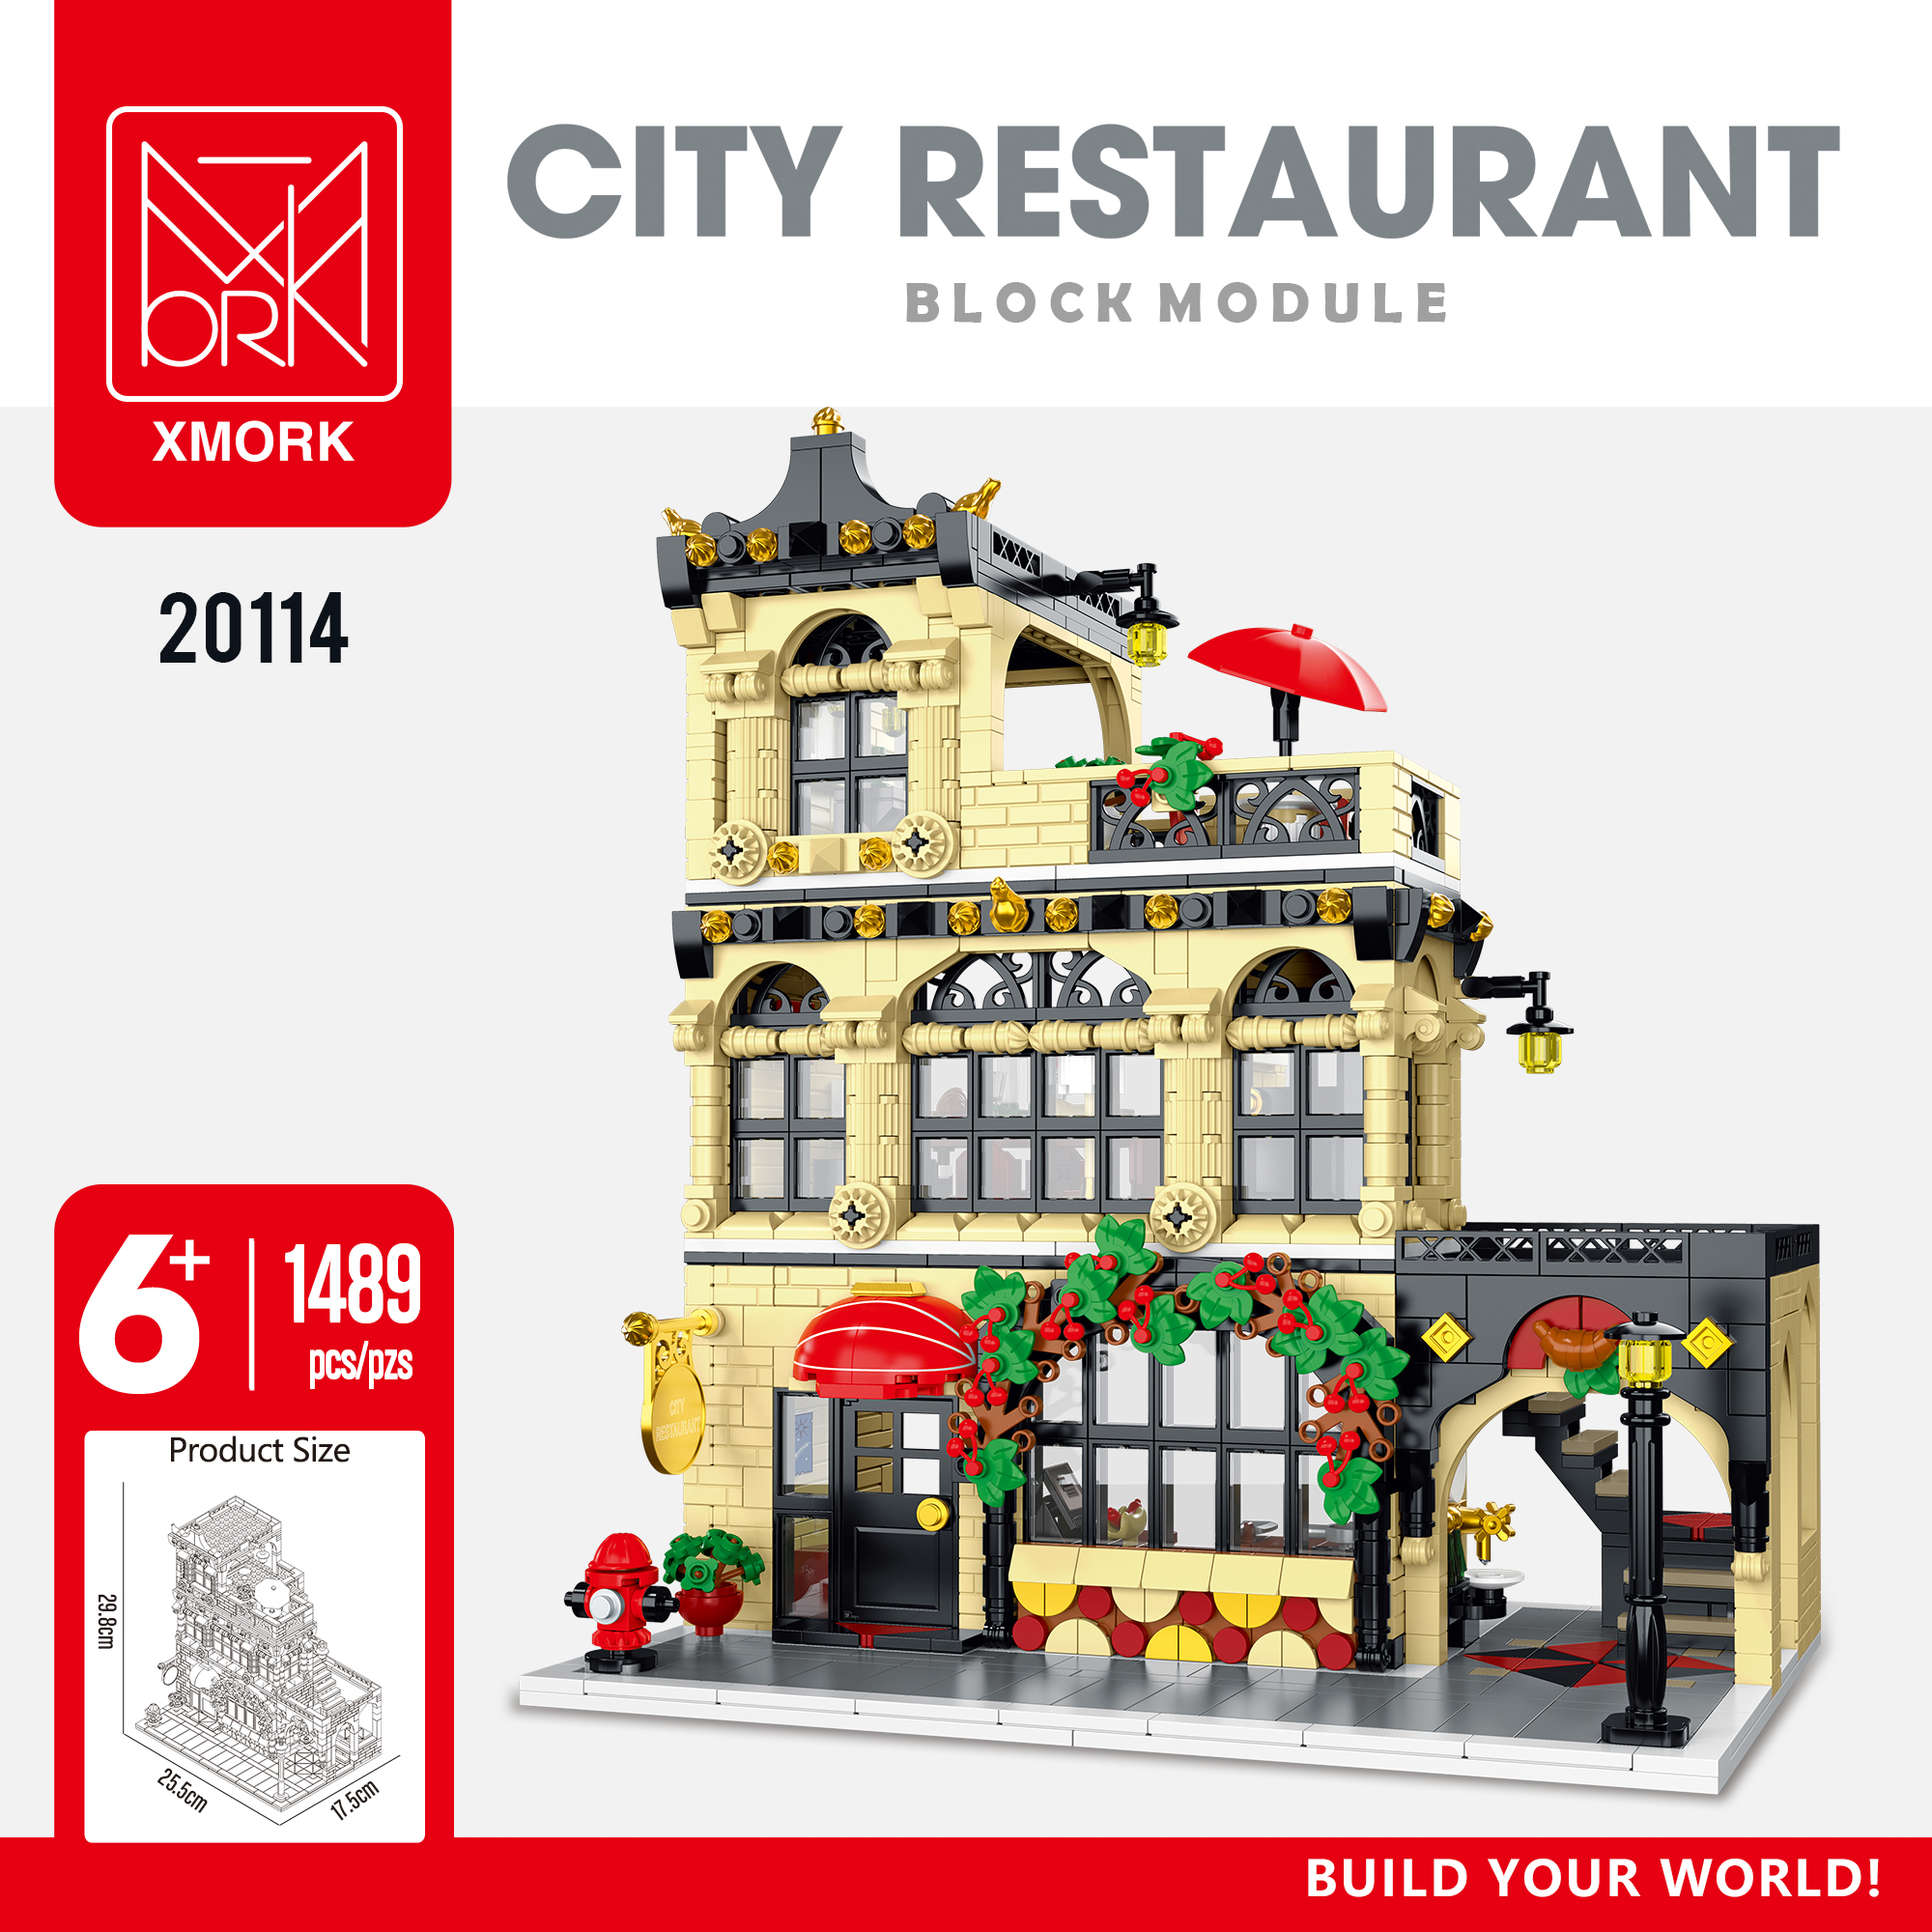 Mork 20114 City Restaurant Block Module